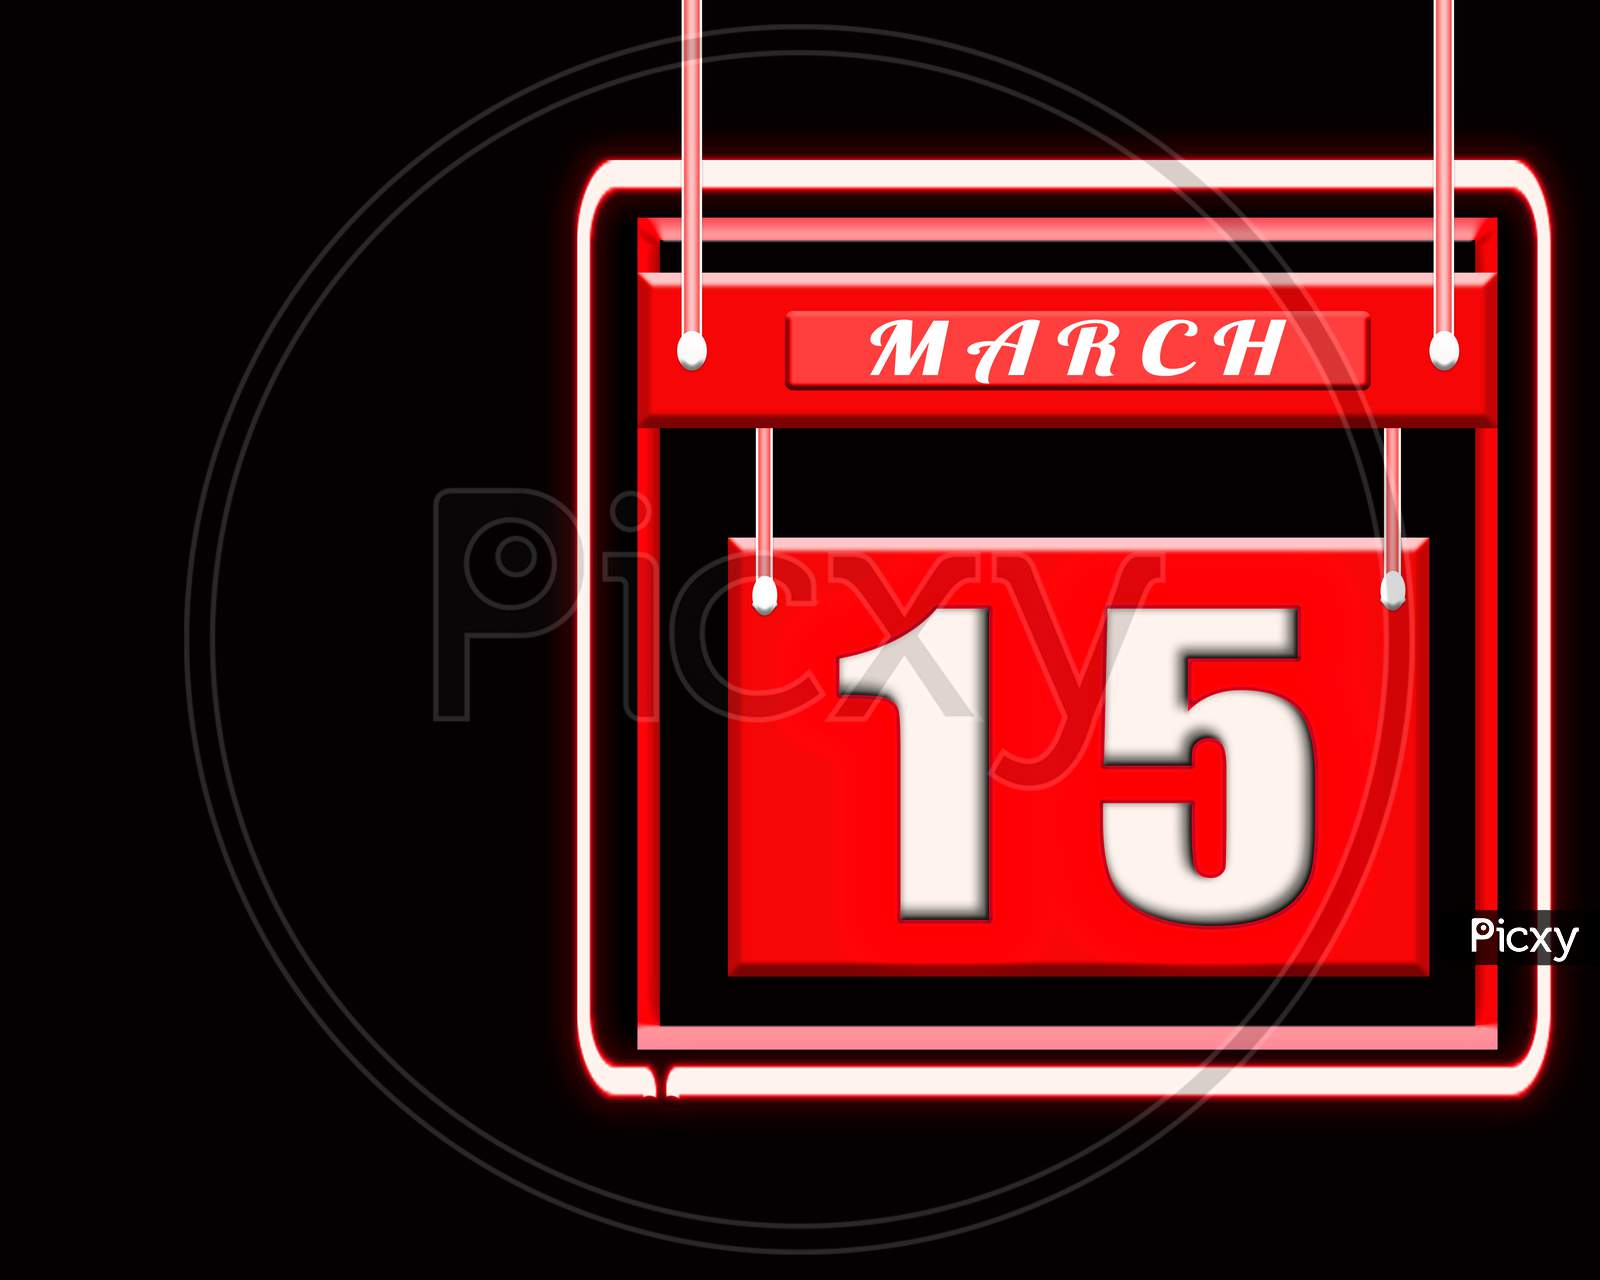 15 March, Red Calendar On Black Backgrand